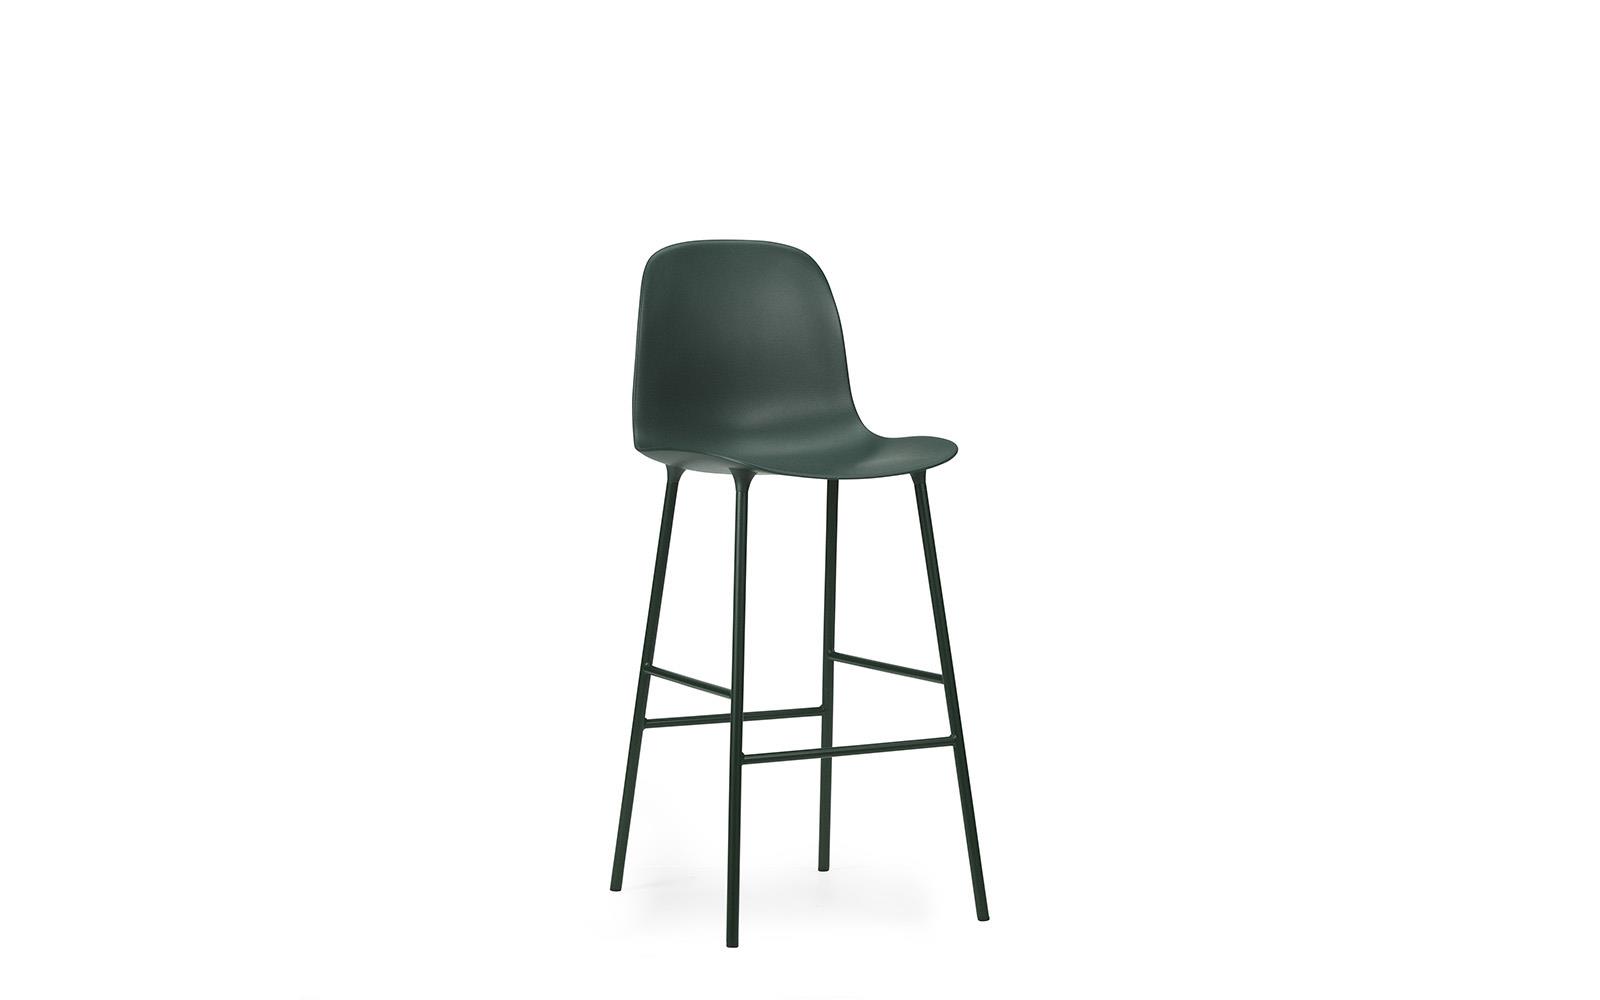 Form Bar Chair 75 cm Steel